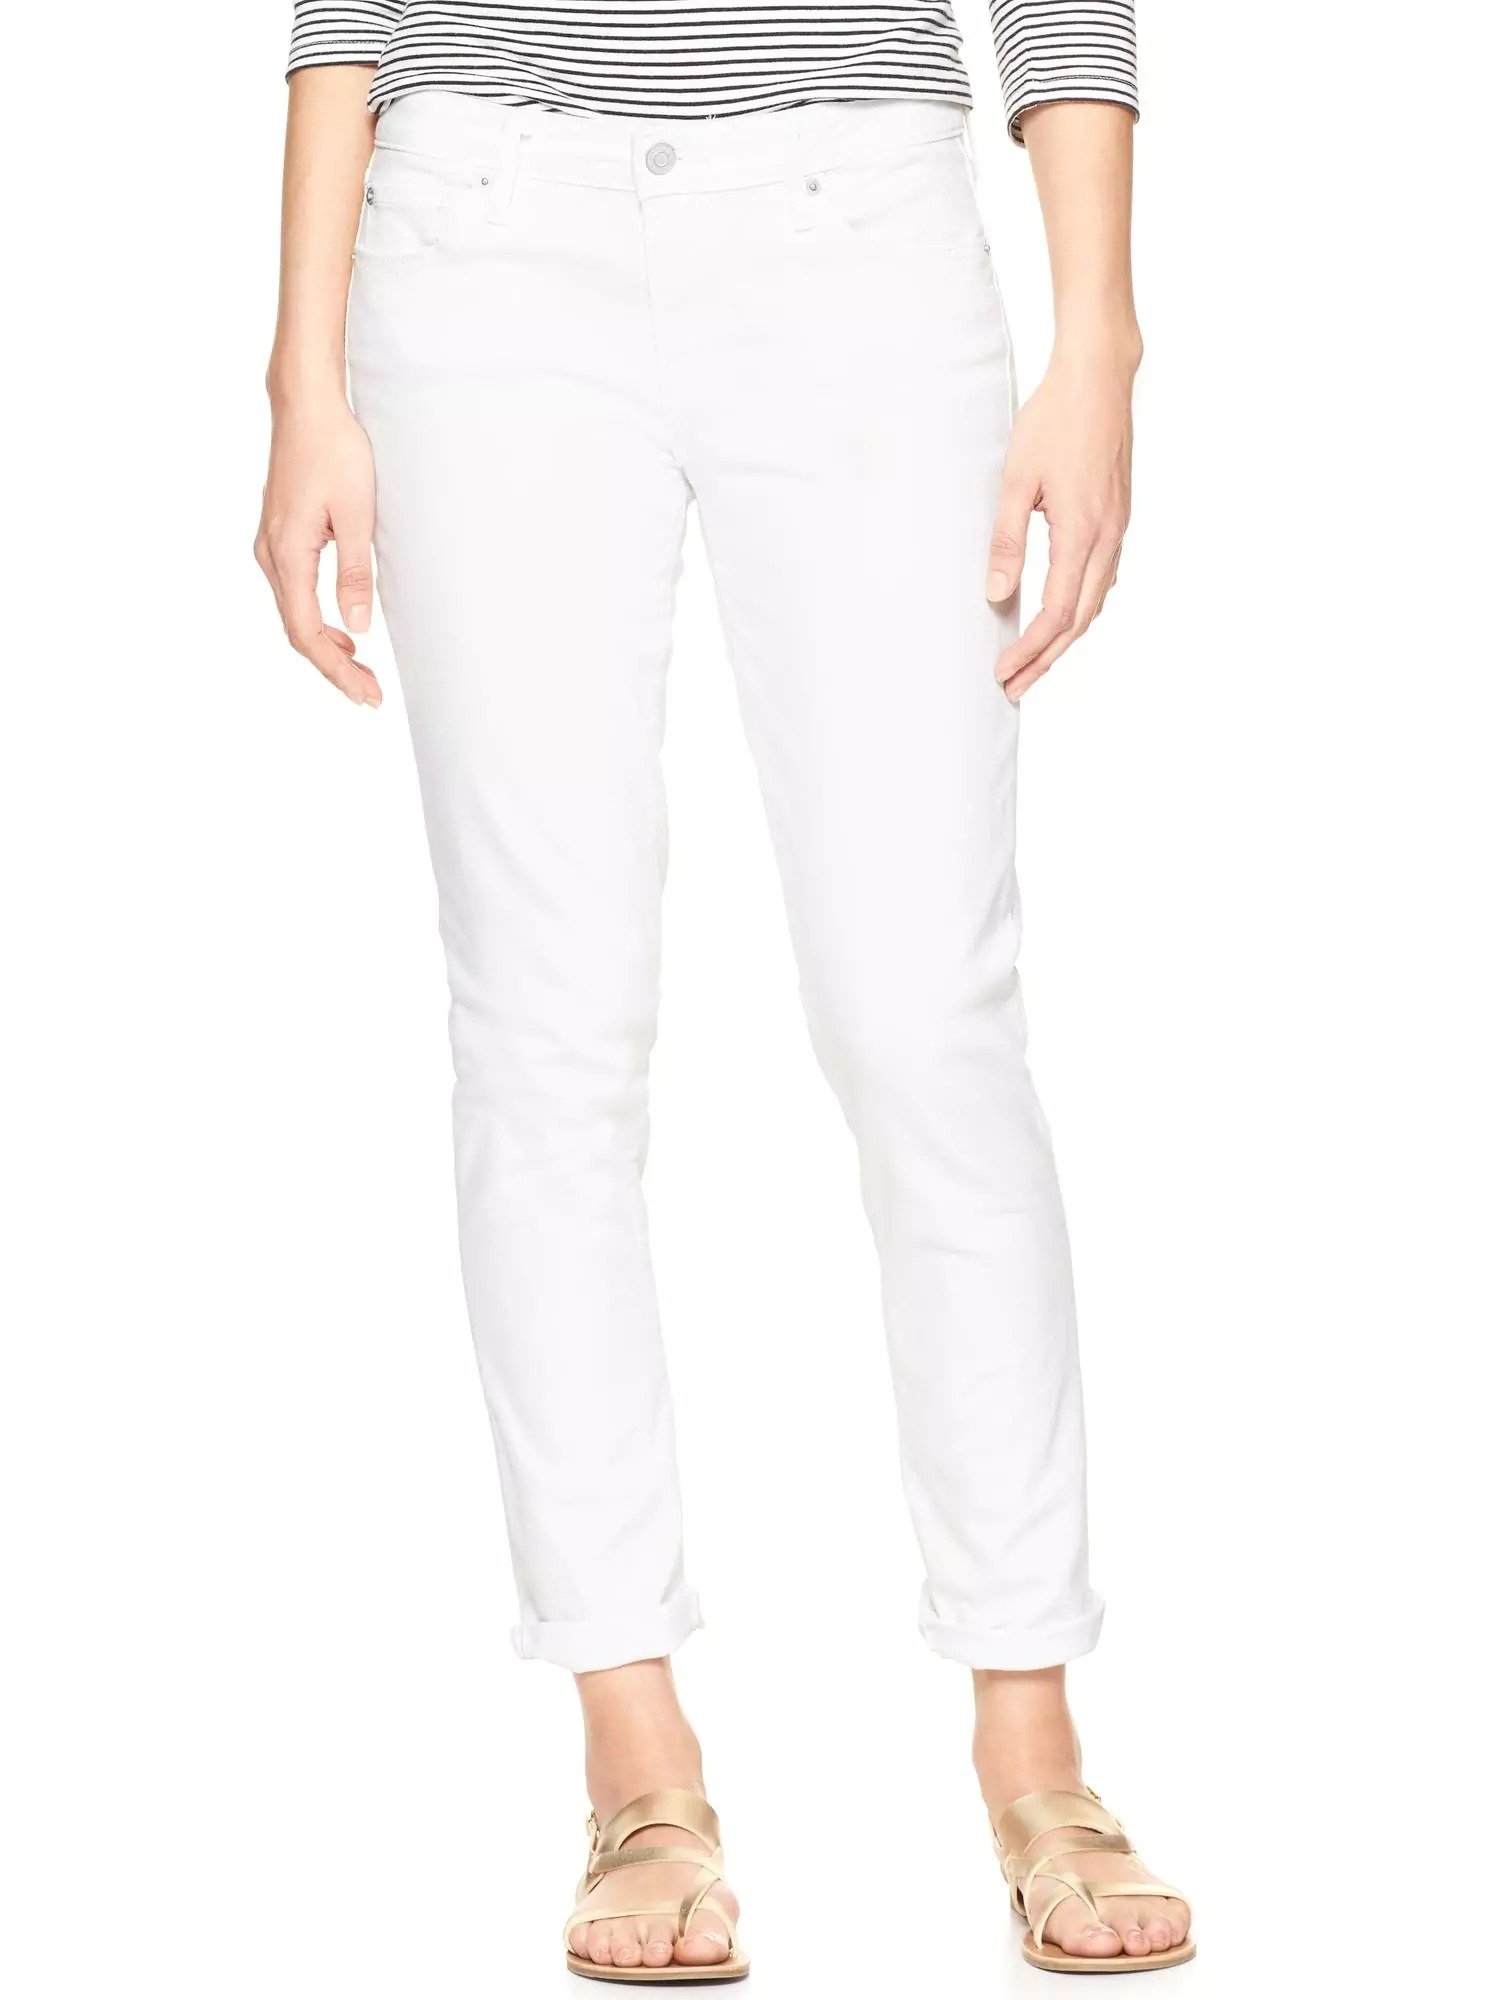 Orta belli kısa girlfriend jean pantolon product image